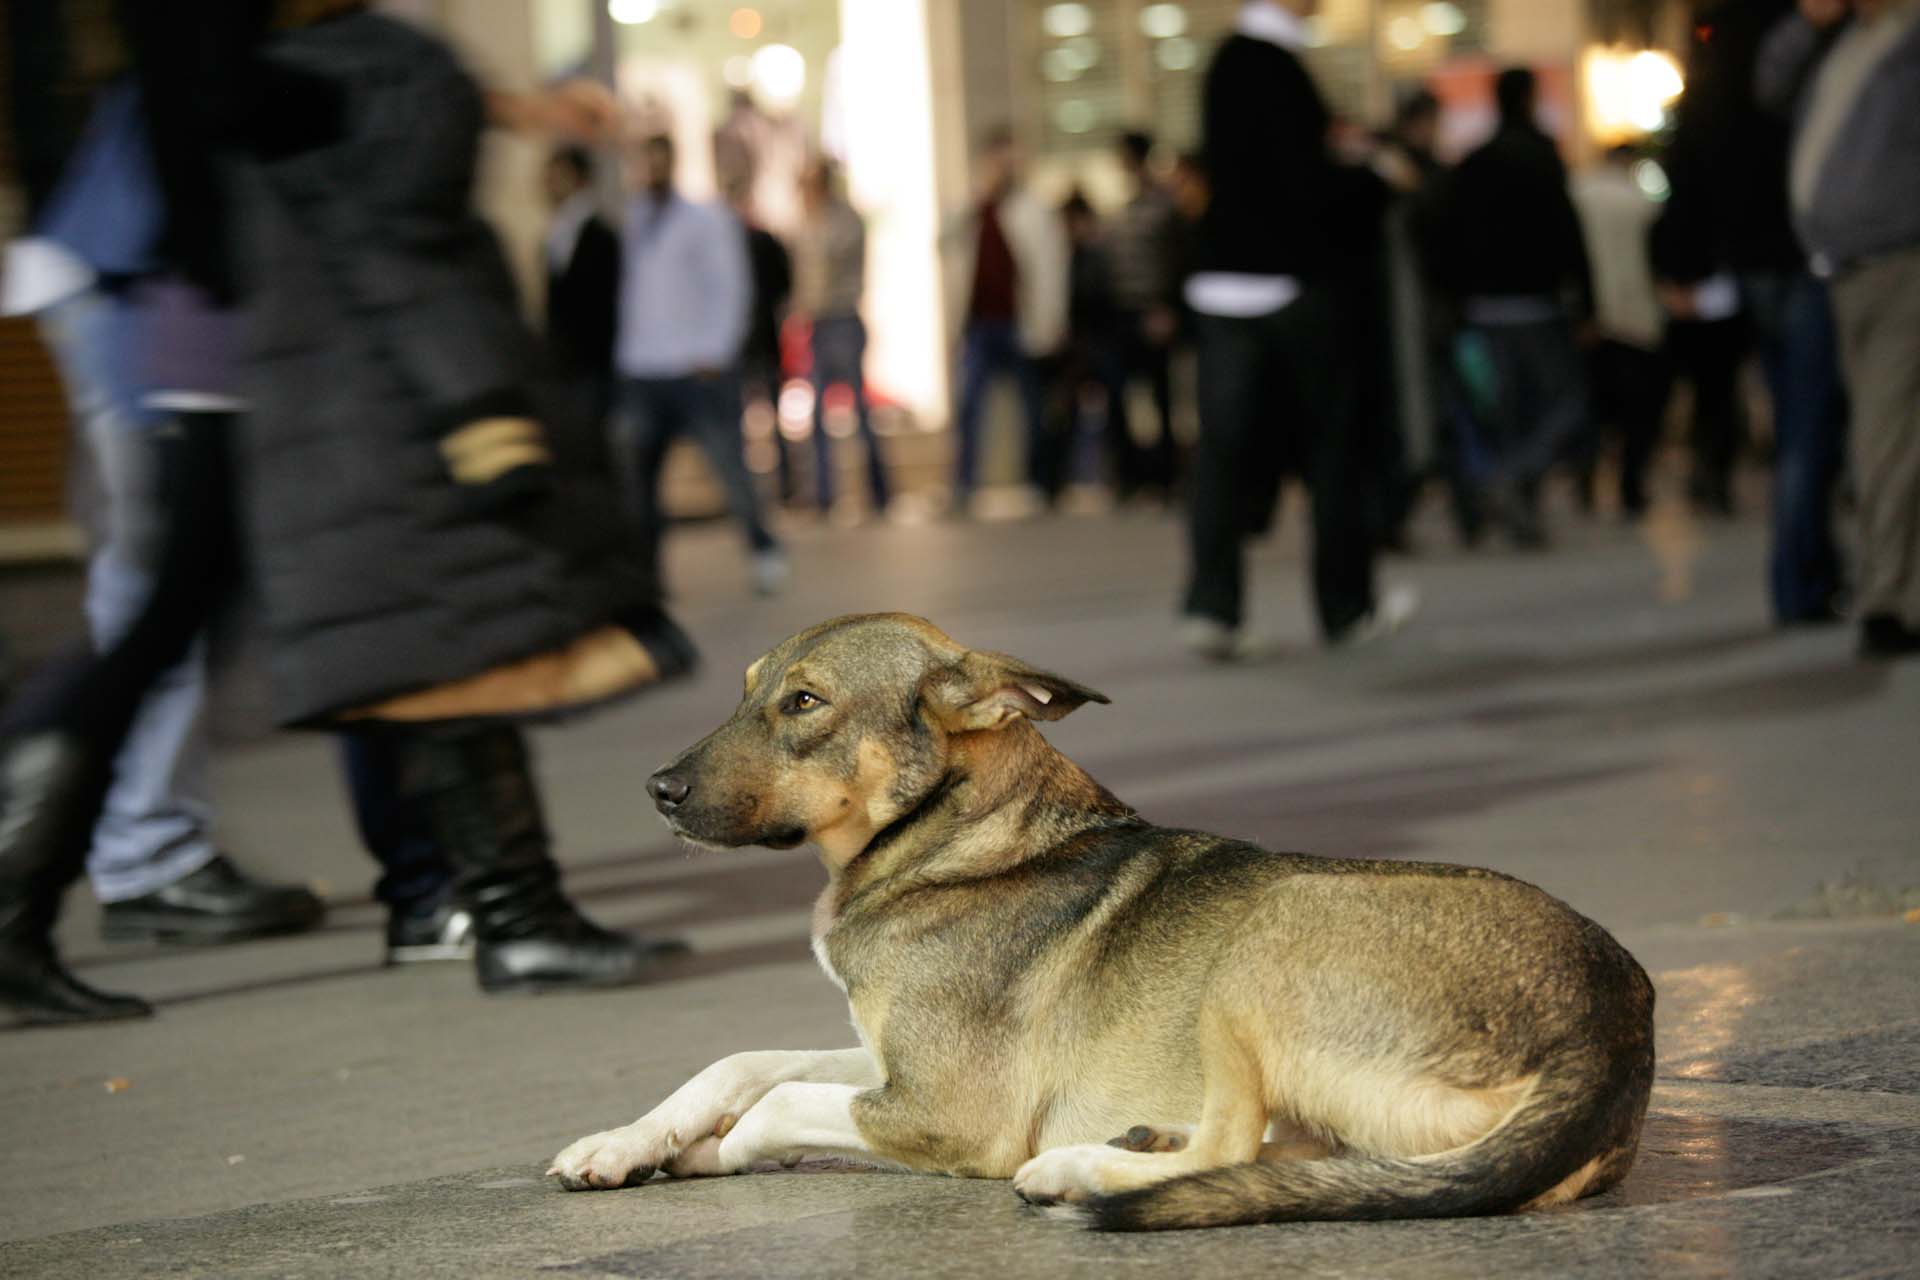 Free living dogs belong to the İstiklal Caddesi, Beyoğlu